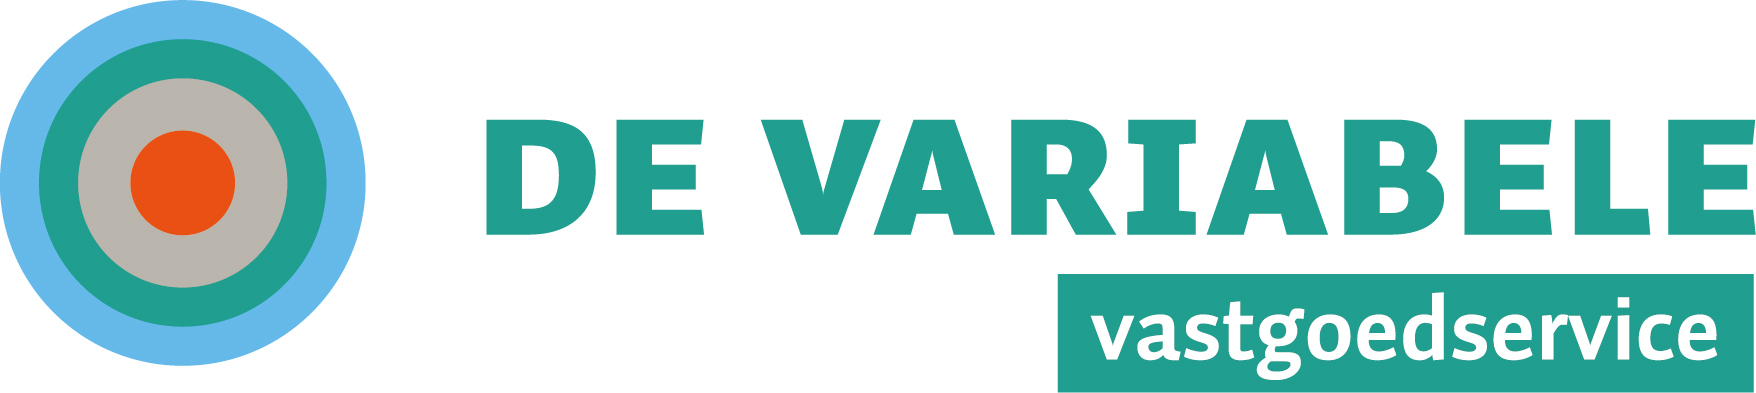 De Variabele logo